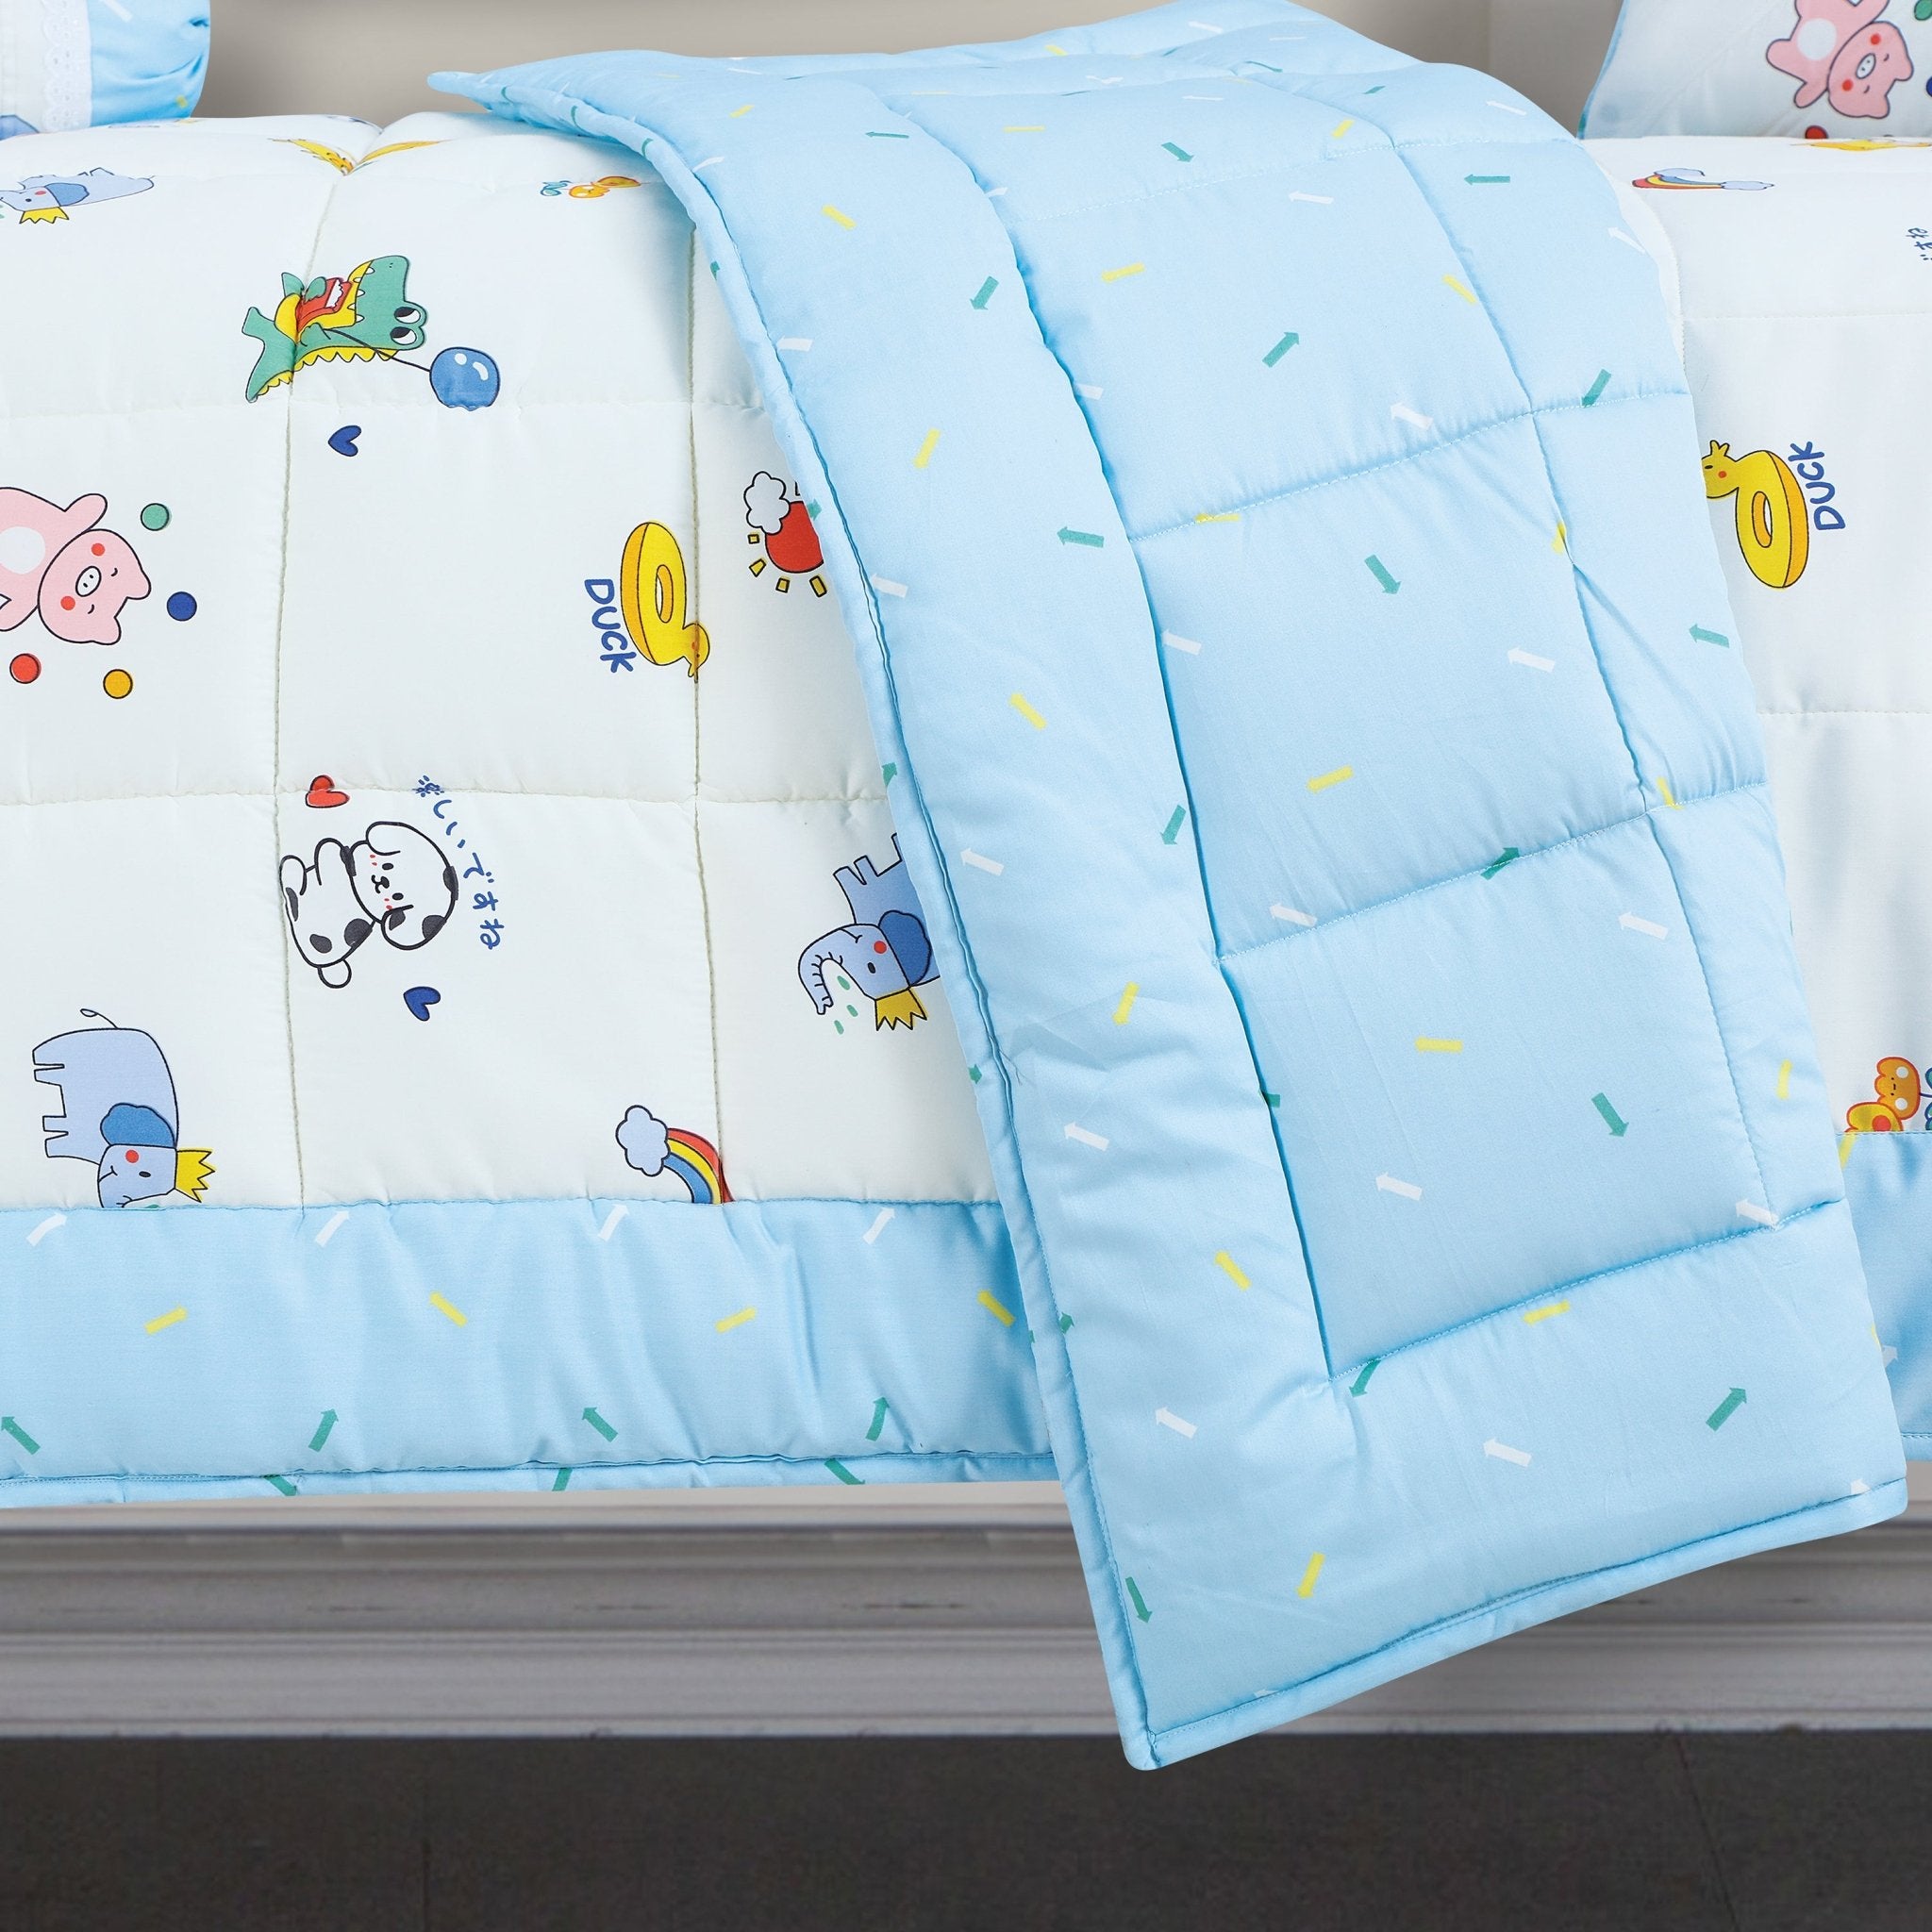 Malako Avene White and Blue Cotton Baby Crib Bedding Set with Comforter - MALAKO